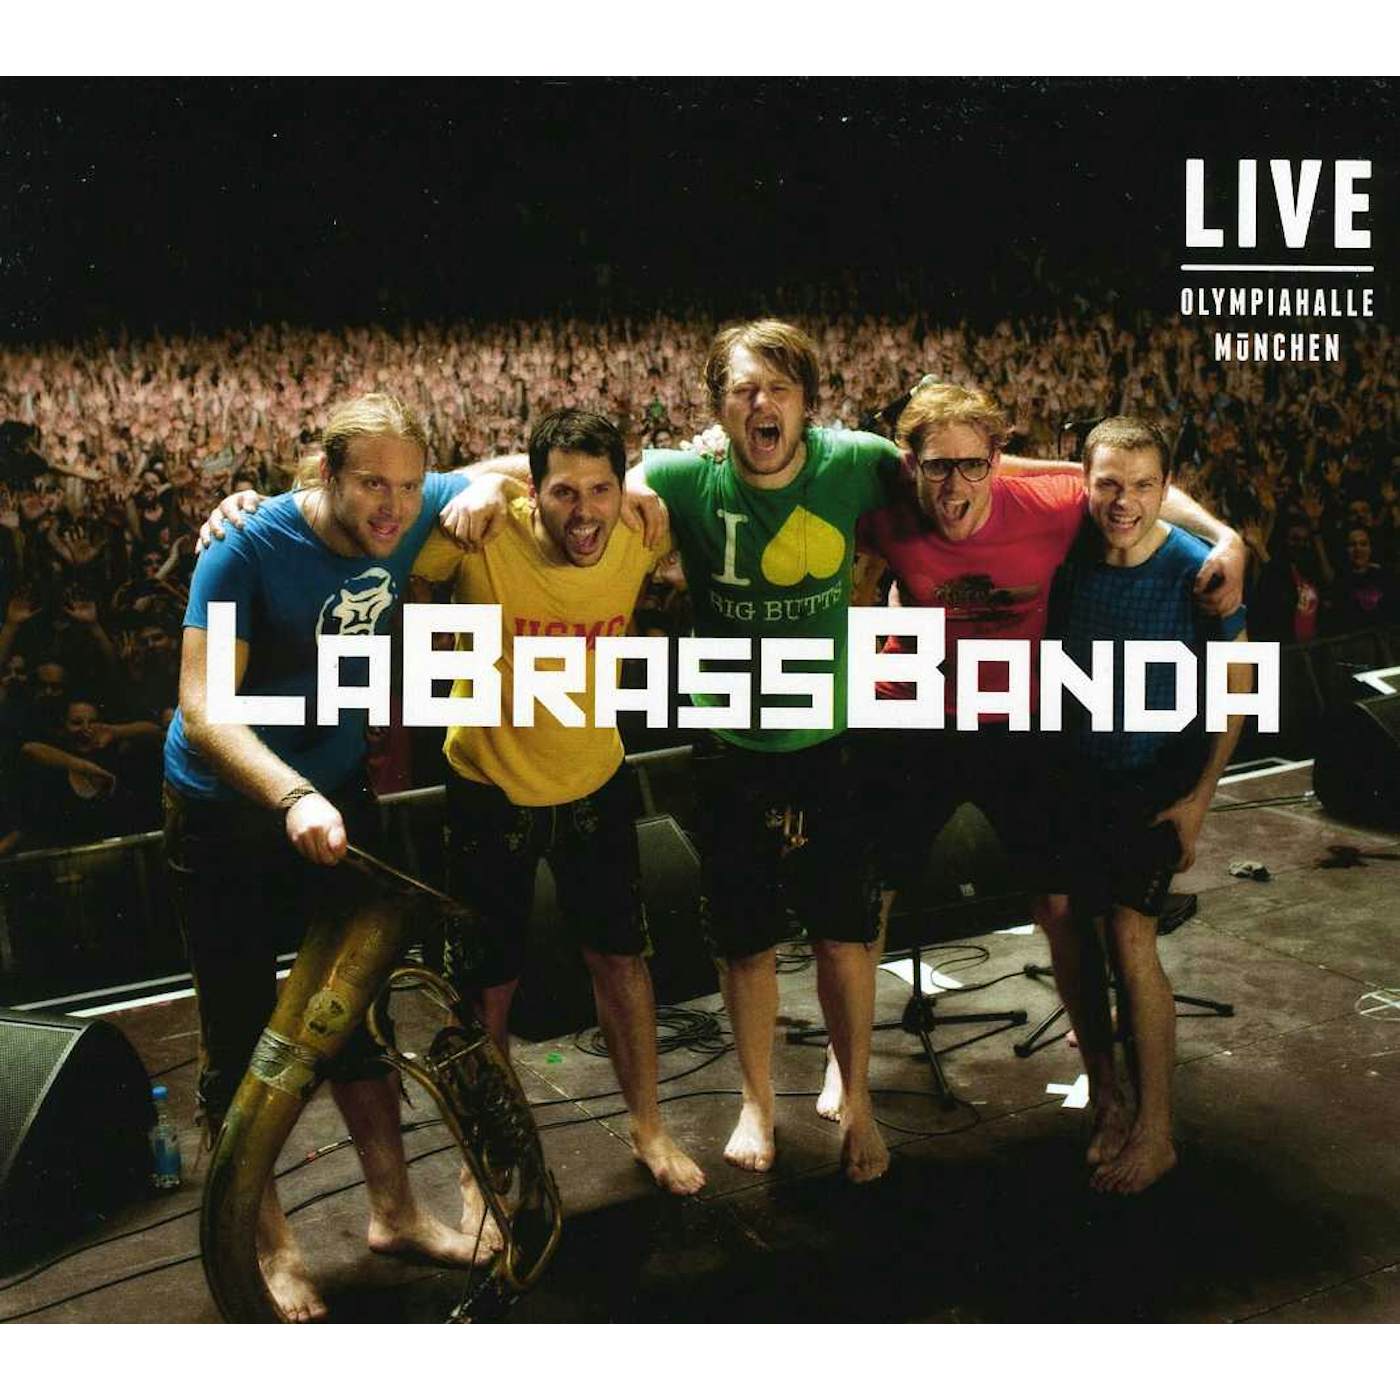 LaBrassBanda LIVE OLYMPIAHALLE MUNCHEN CD